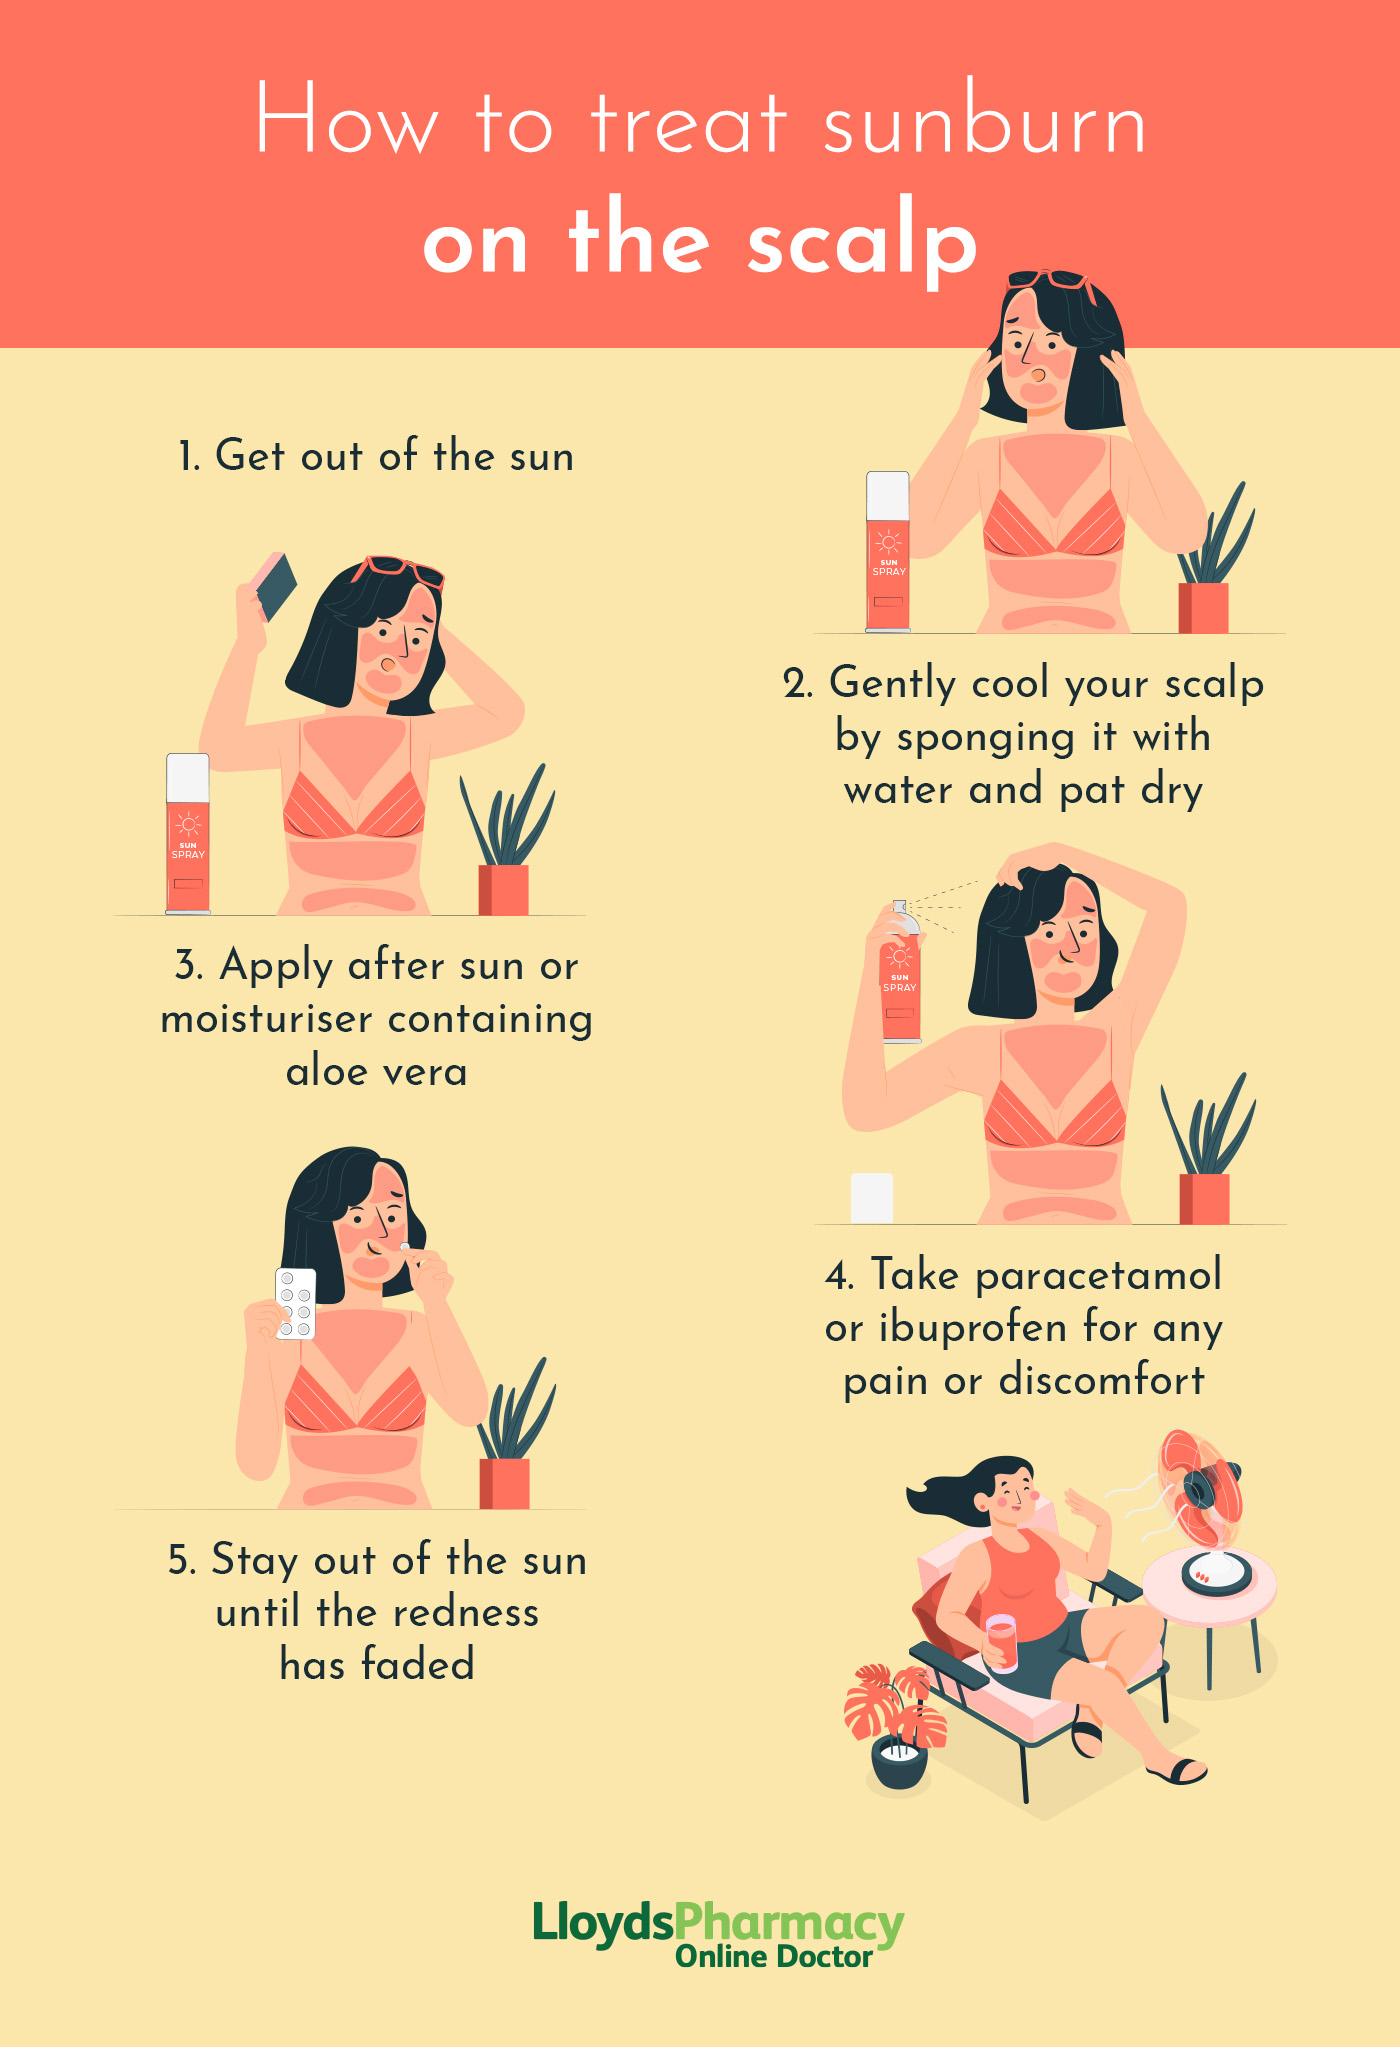 How to treat sunburn on scalp